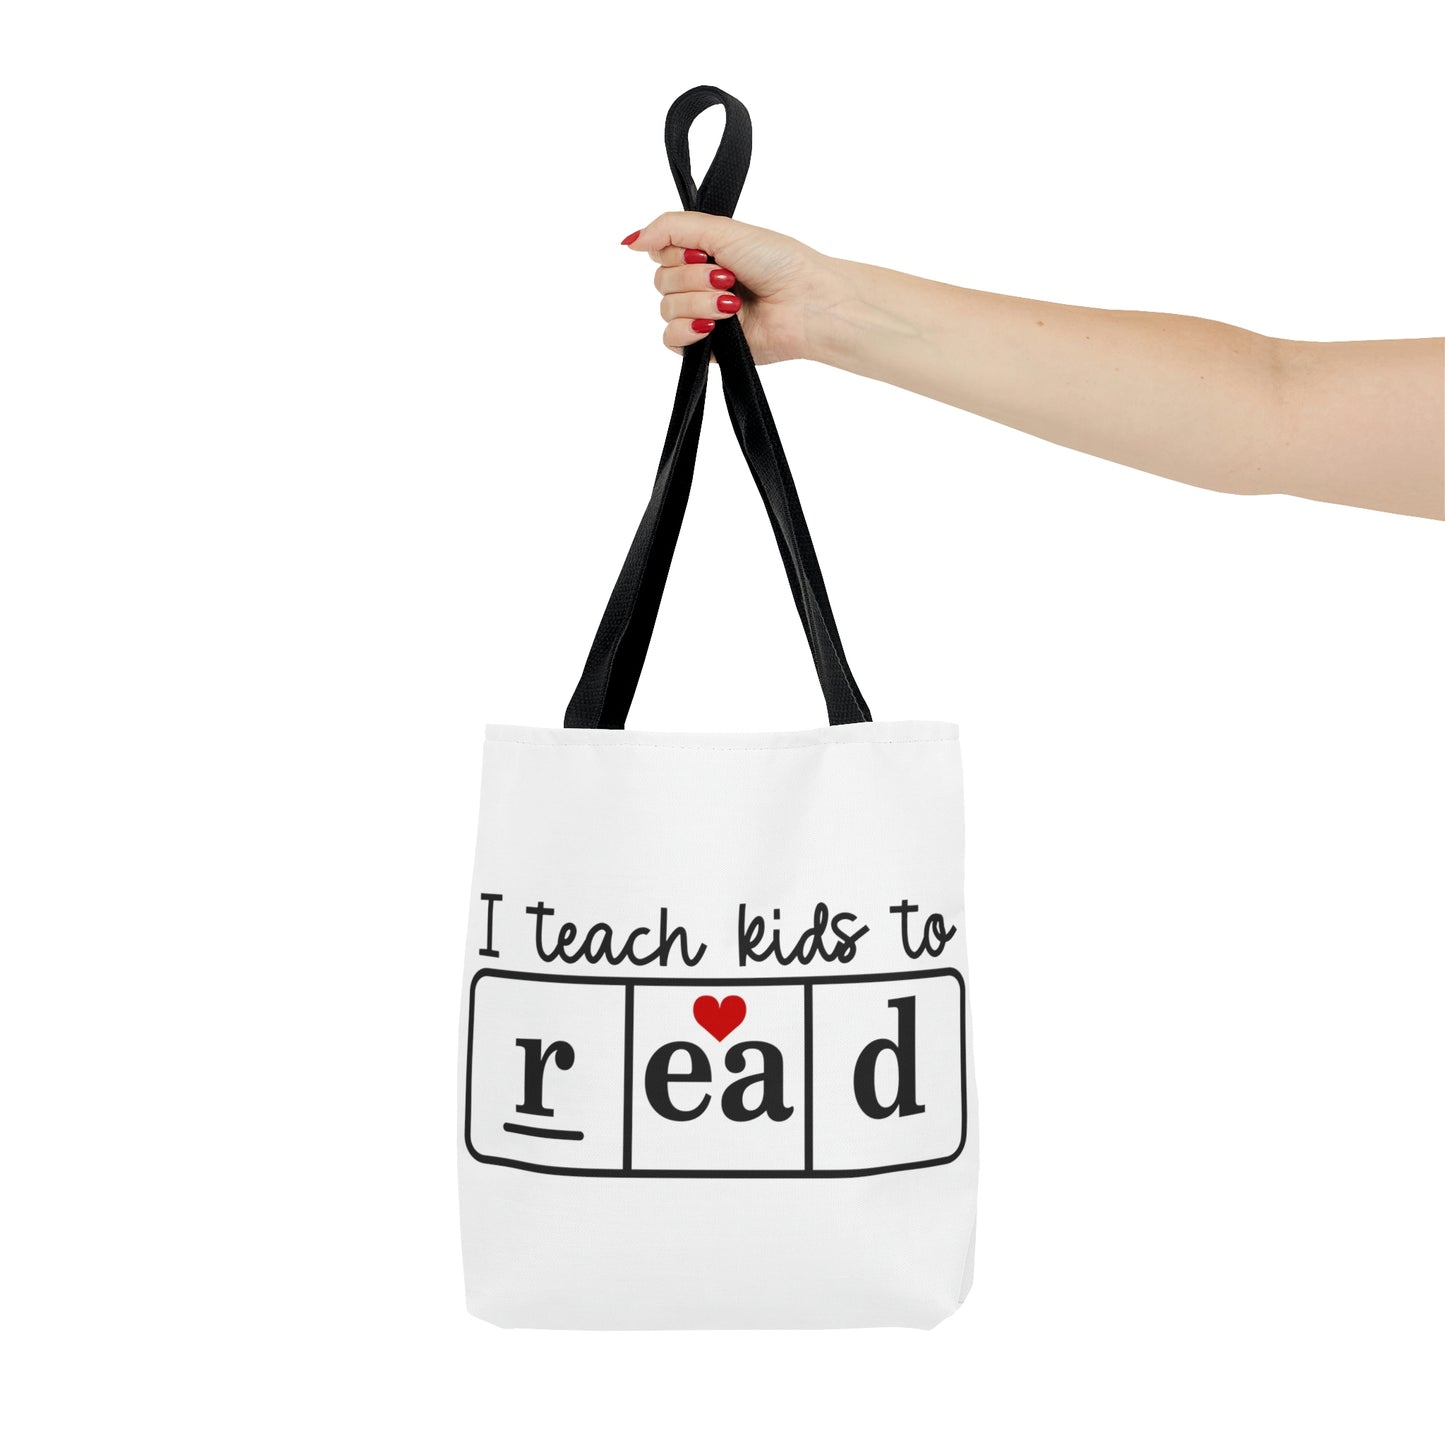 "I Teach Kids to Read" Tote Bag